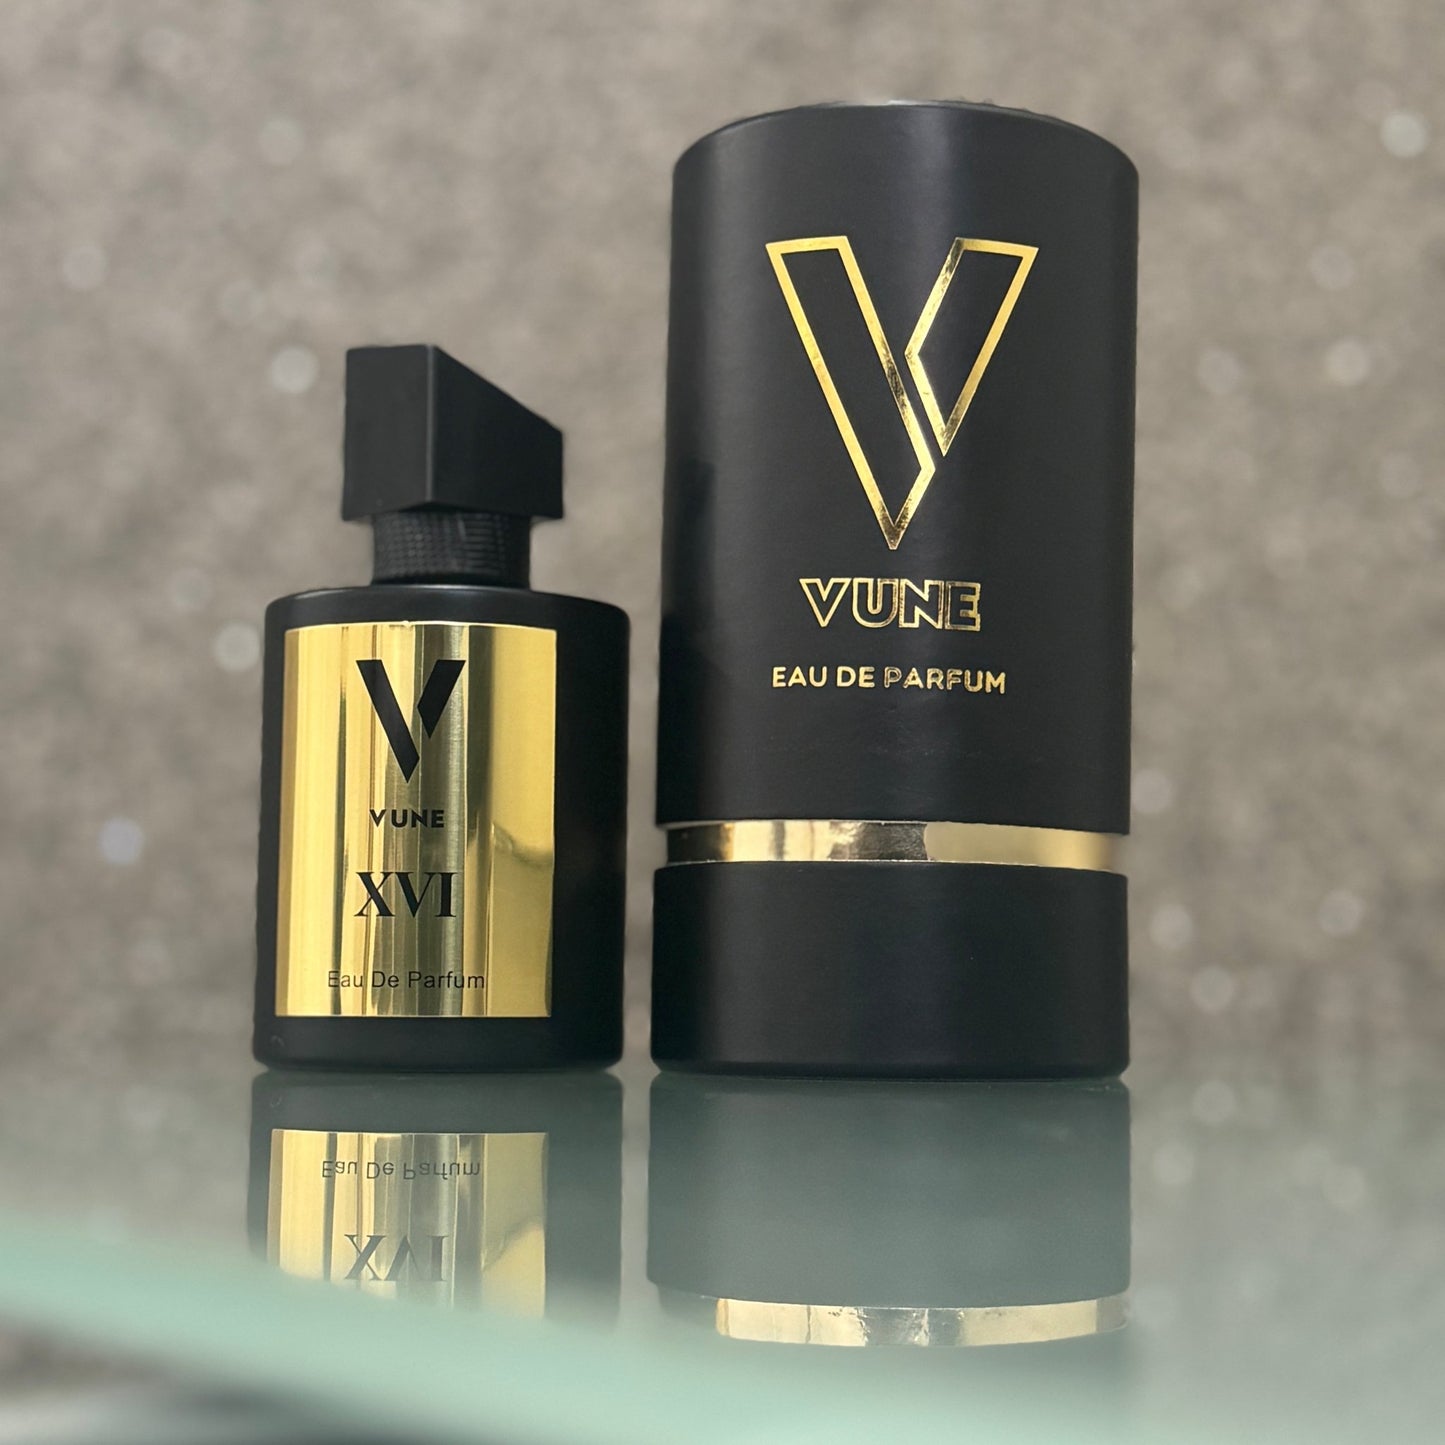 VII 50ml Eau De Parfum - Vune Essence